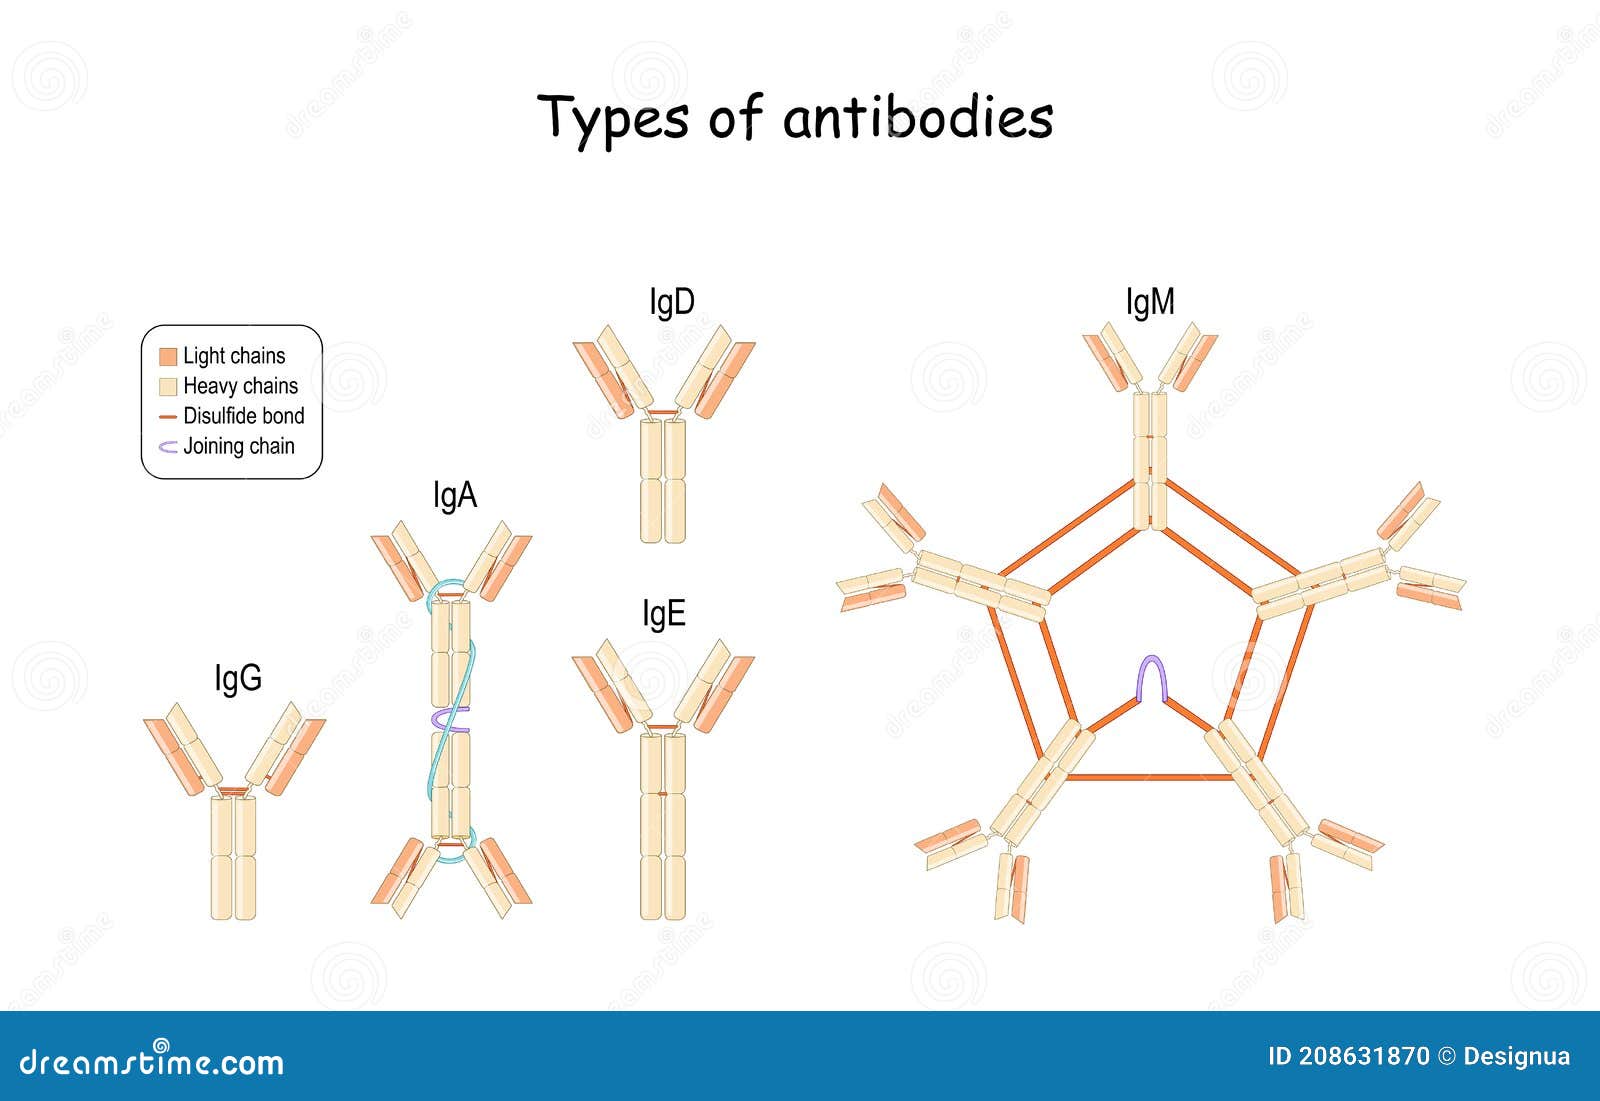 Иммуноглобулины iga igm igg. Antibody Types. Секреторный iga. Iga антитела. Classes of the Immunoglobulin.